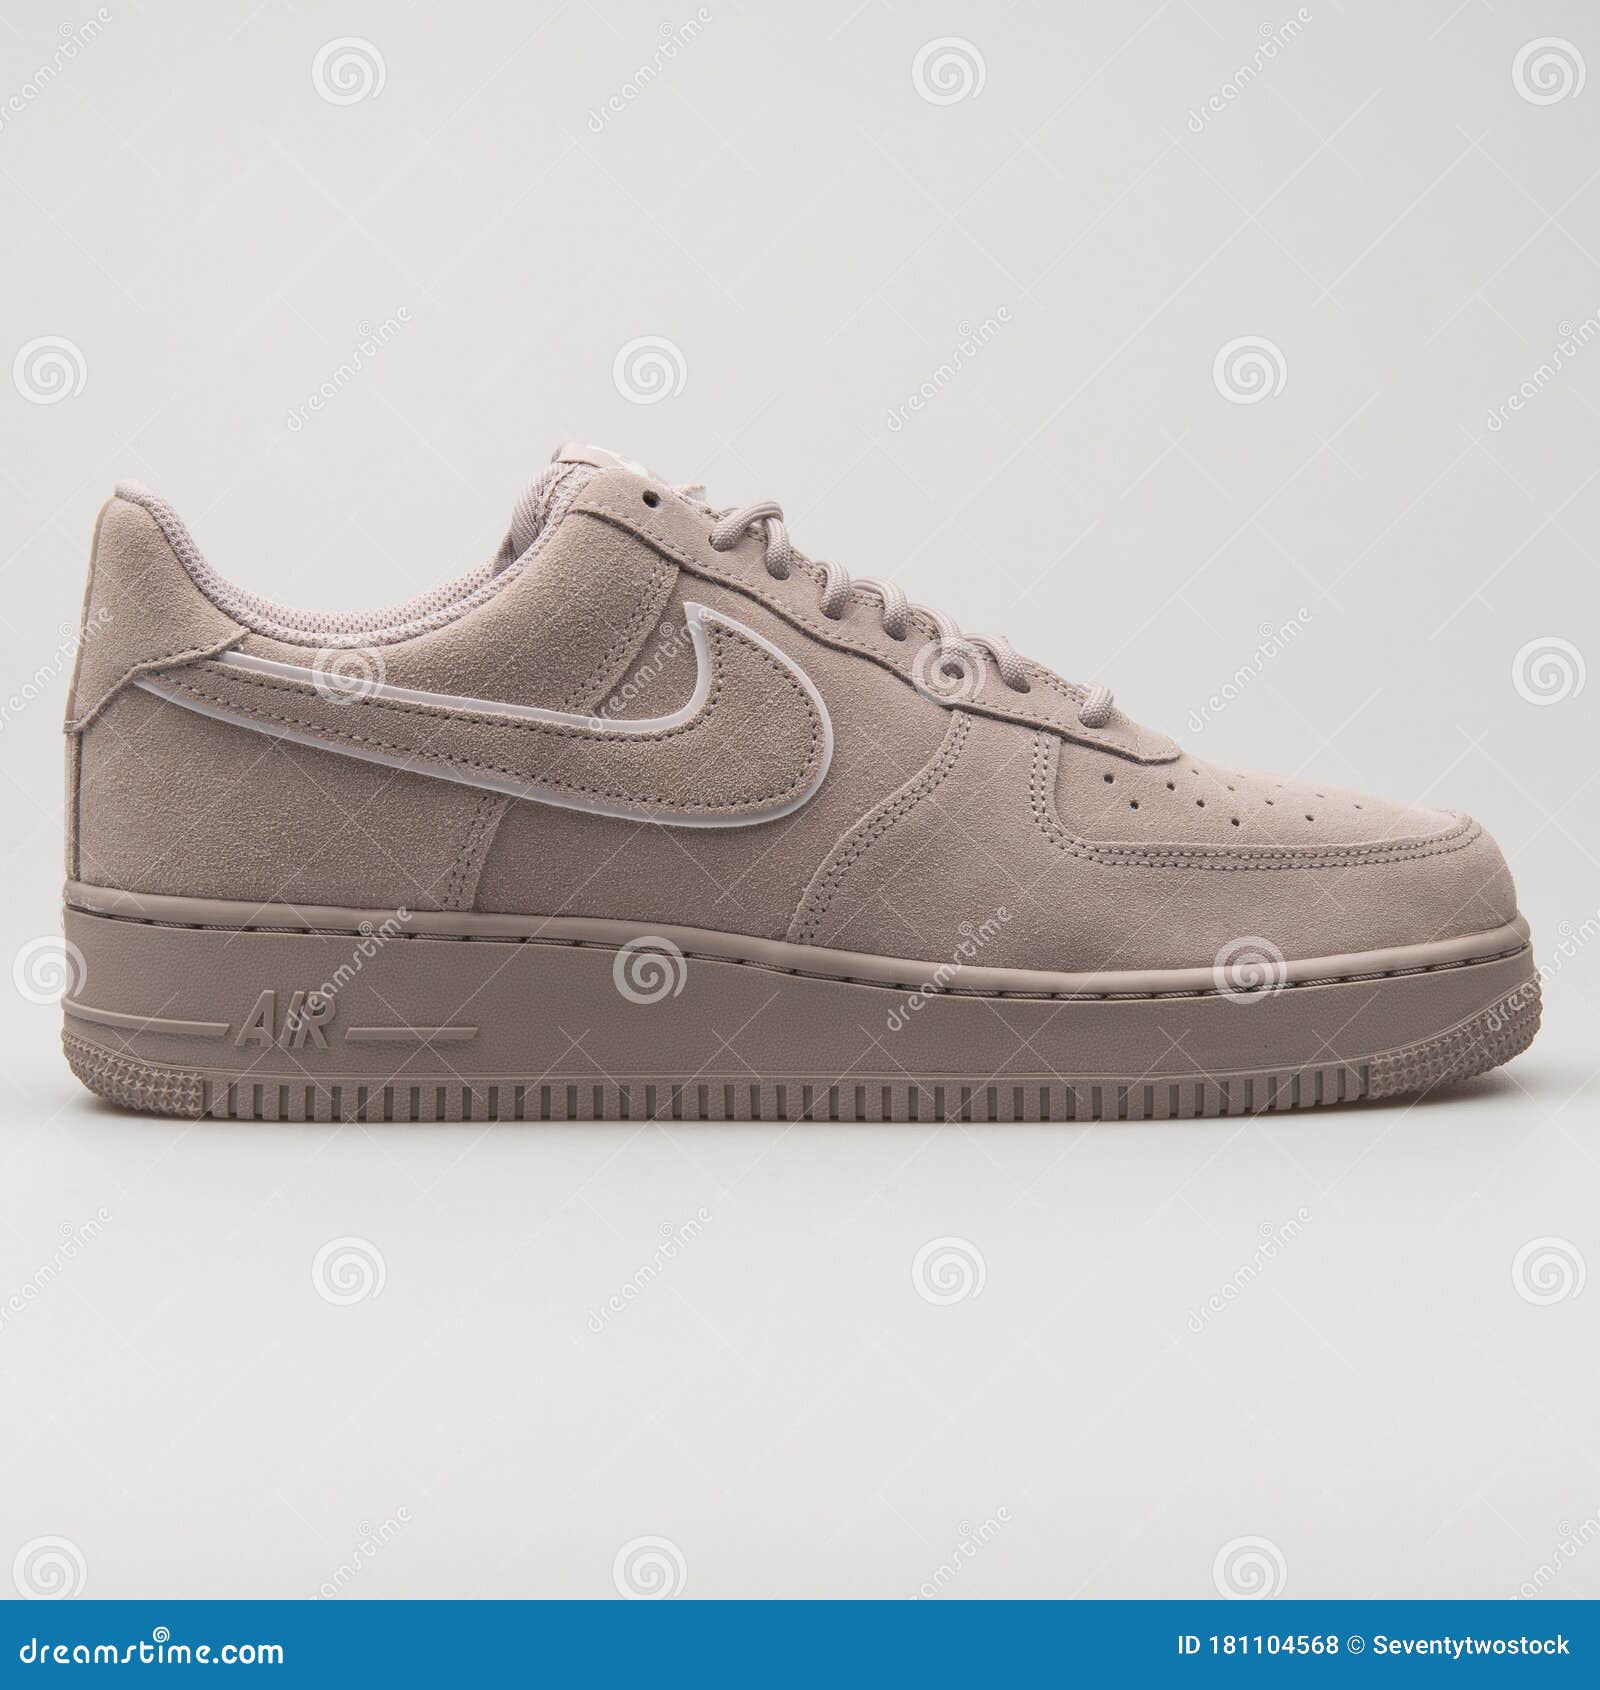 Nike Air Force 1 07 Lv8 Suede Gris Sneaker Foto de archivo editorial - Imagen producto, nike: 181104568